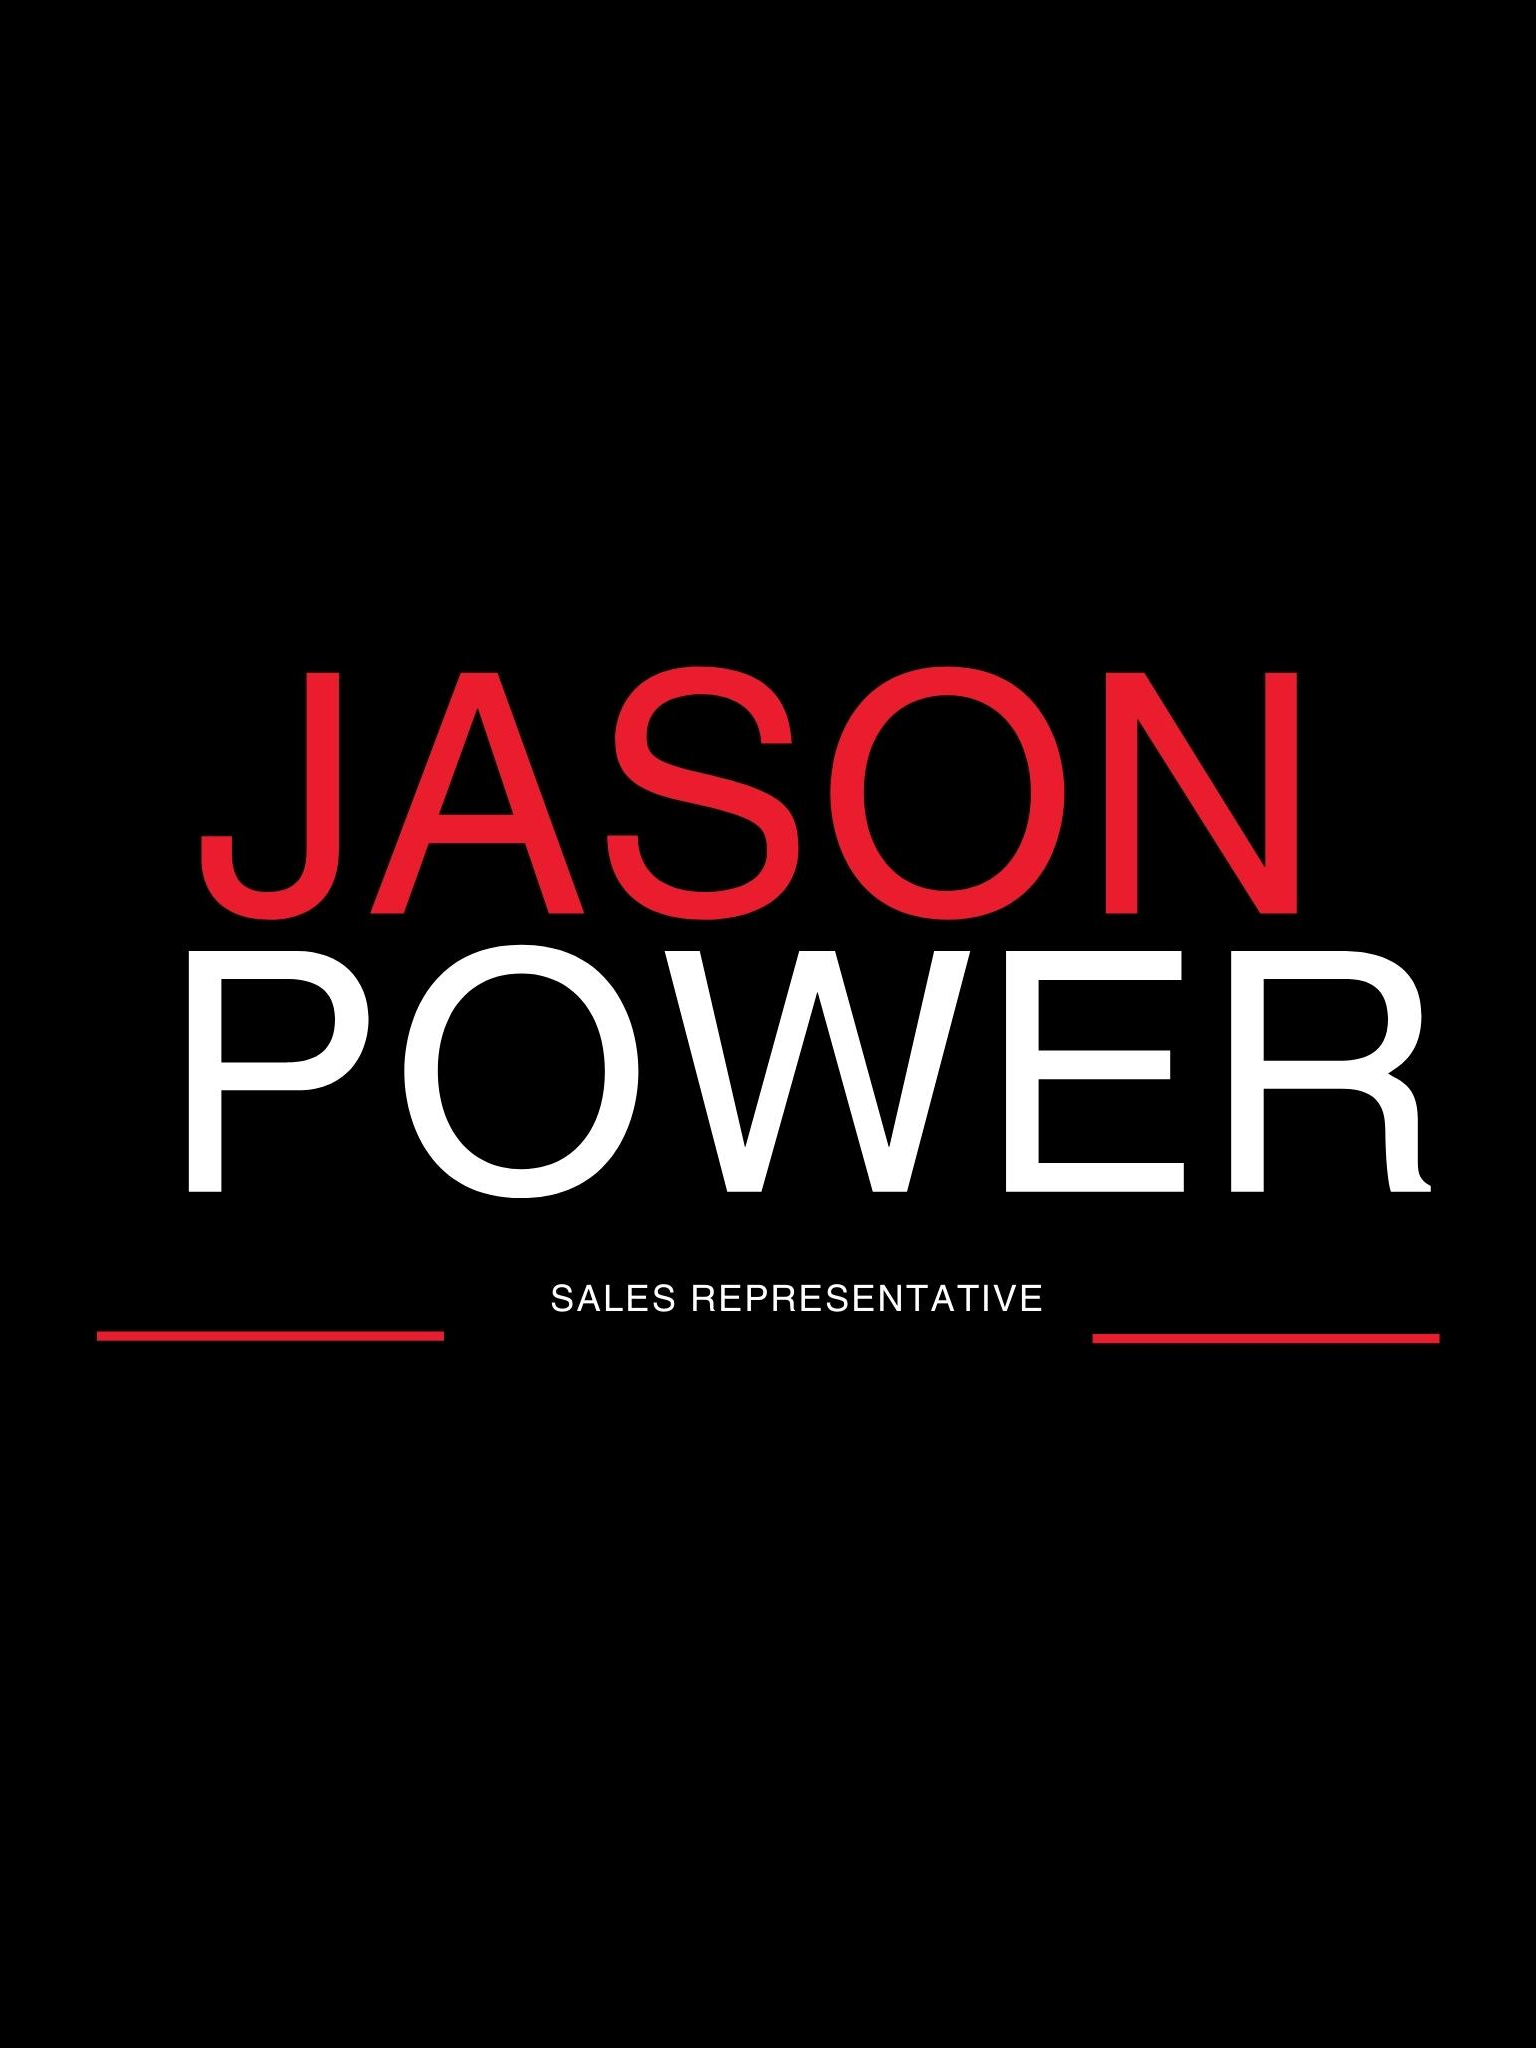 Jason Power